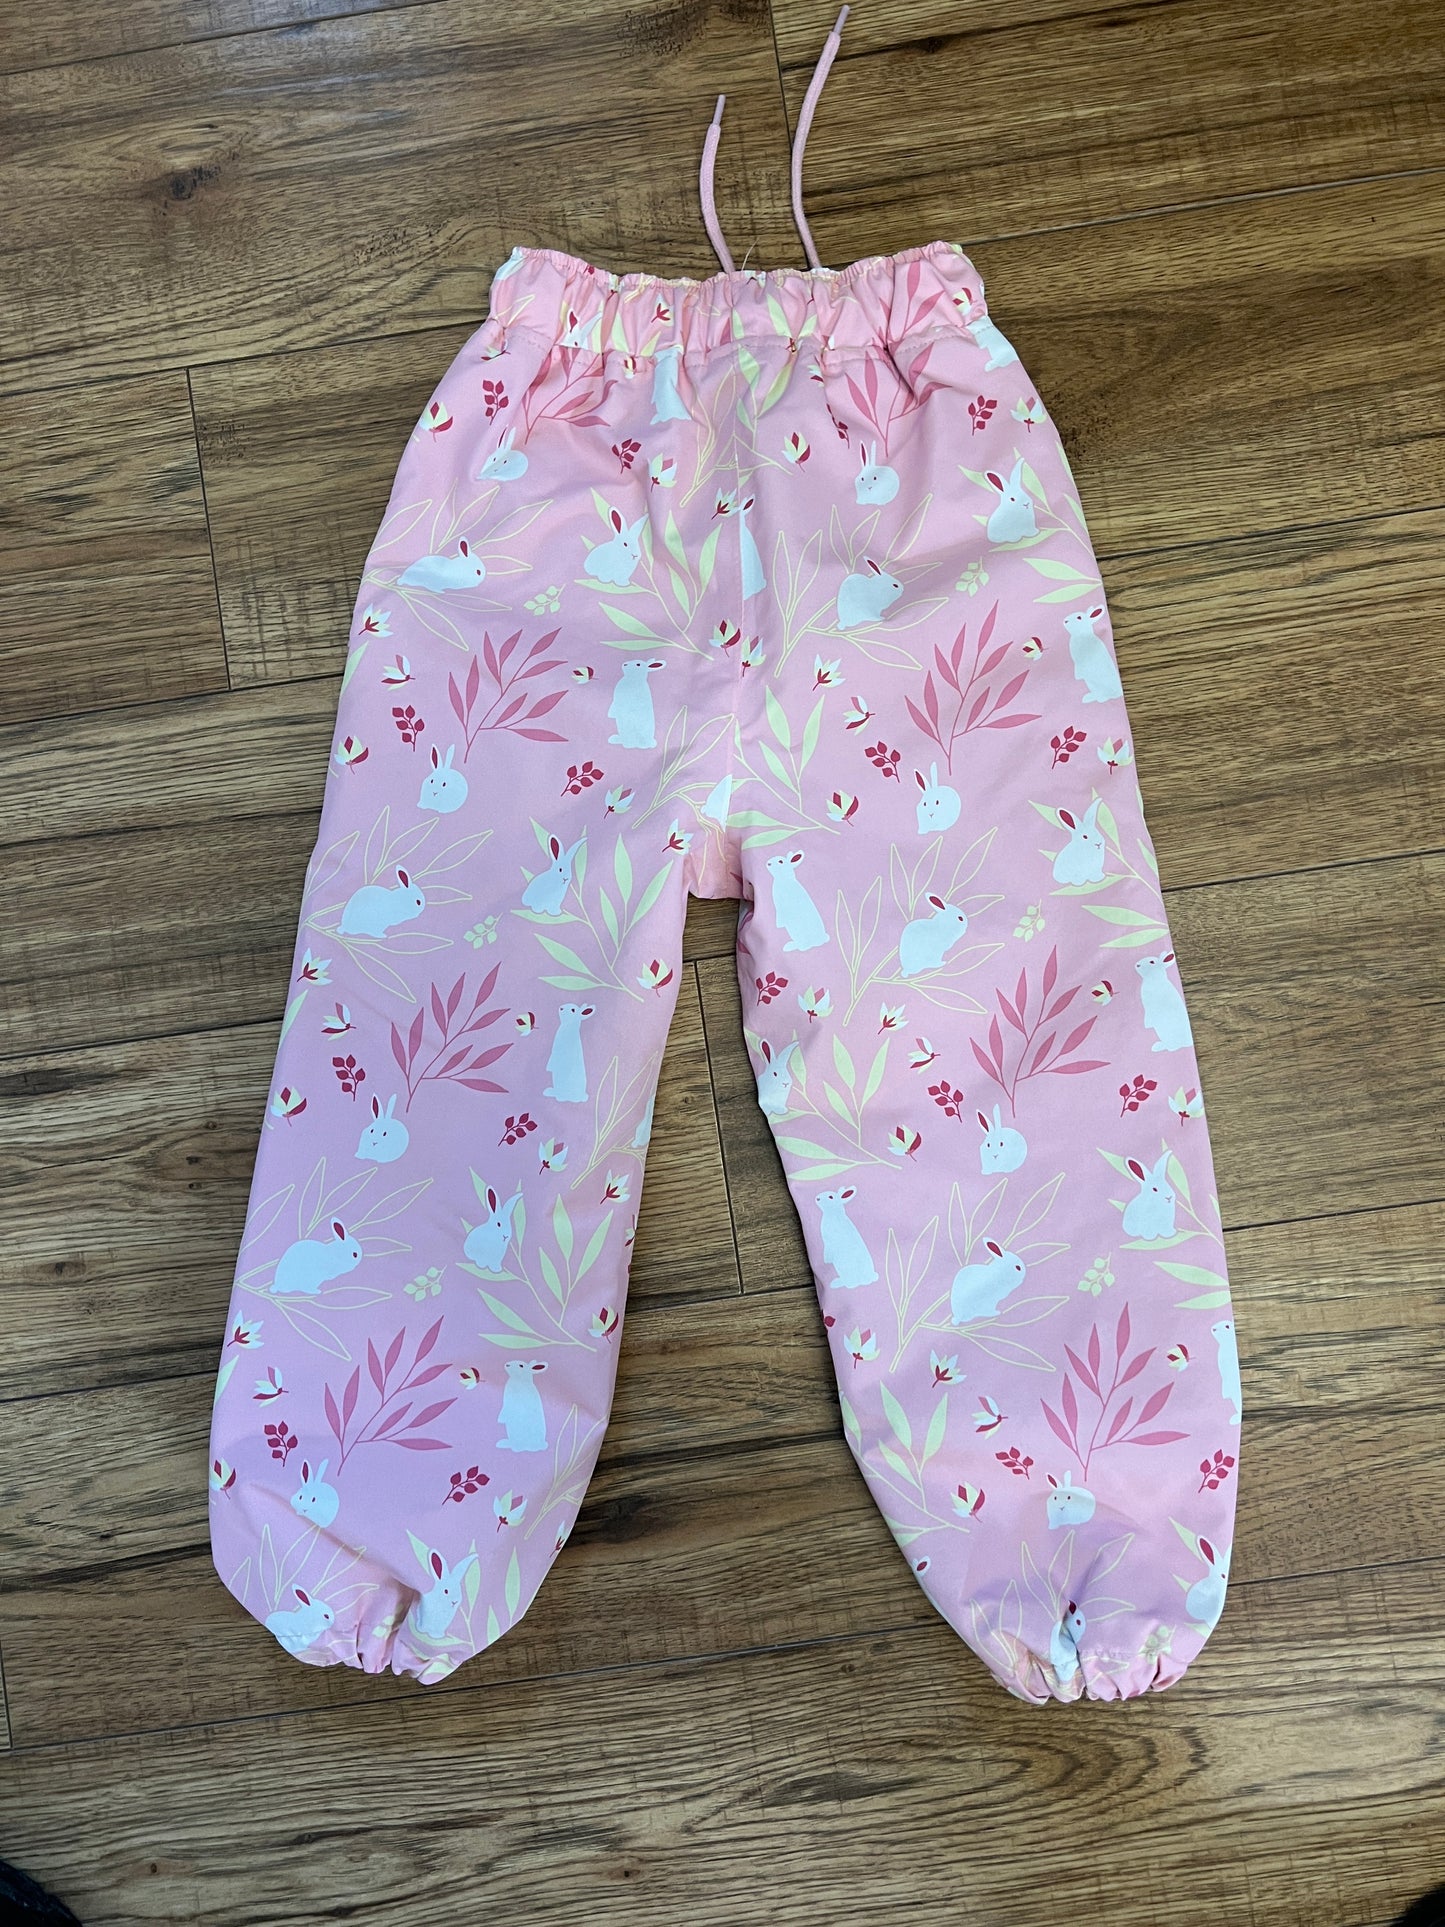 Rain Pants Child Size 4 Jan and Jul Waterproof Rain Snow Fleece Lined Pink Bunnies Like New